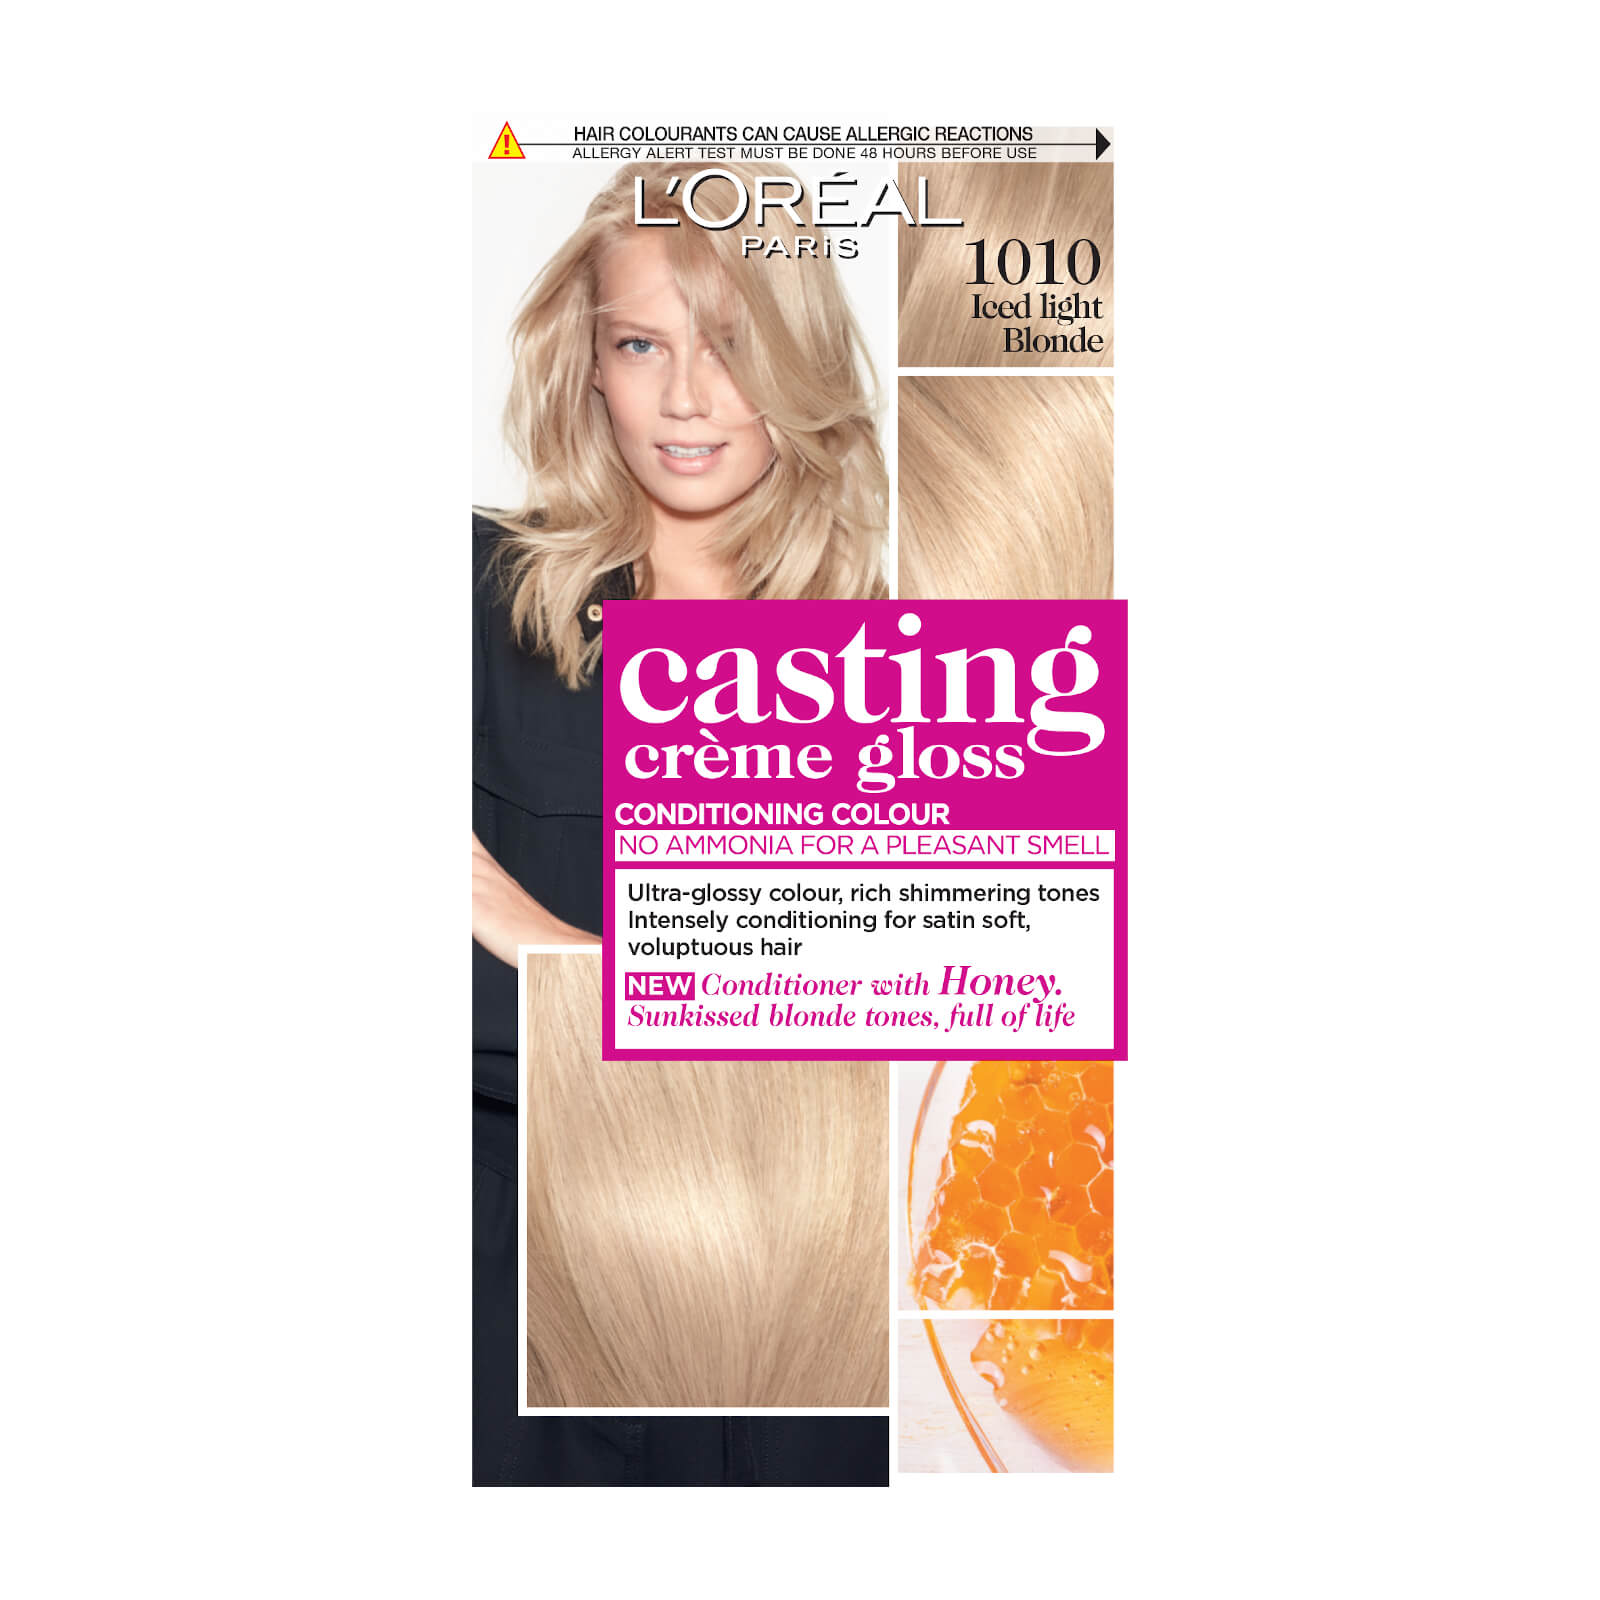 L'Oreal Paris Casting Creme Gloss Semi-Permanent Hair Dye (Various Shades) - 1010 Iced Light Blonde